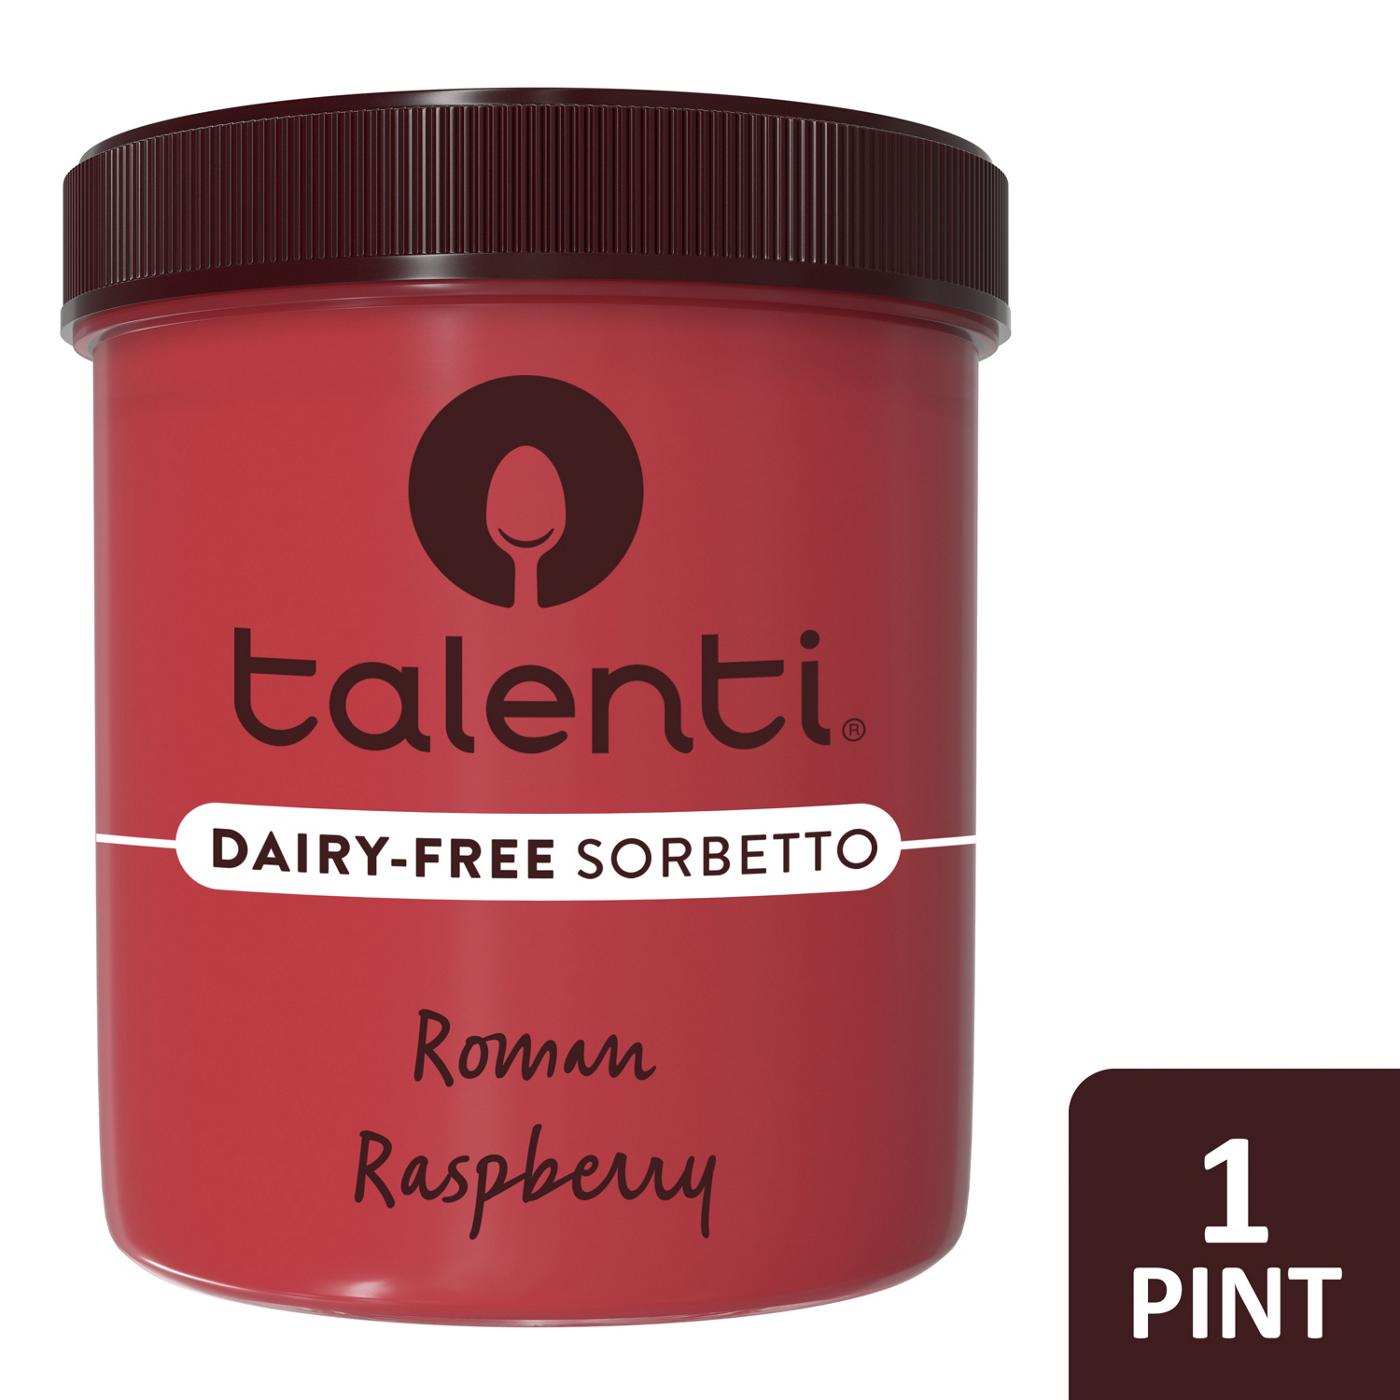 Talenti Roman Raspberry Dairy-Free Sorbetto; image 2 of 9